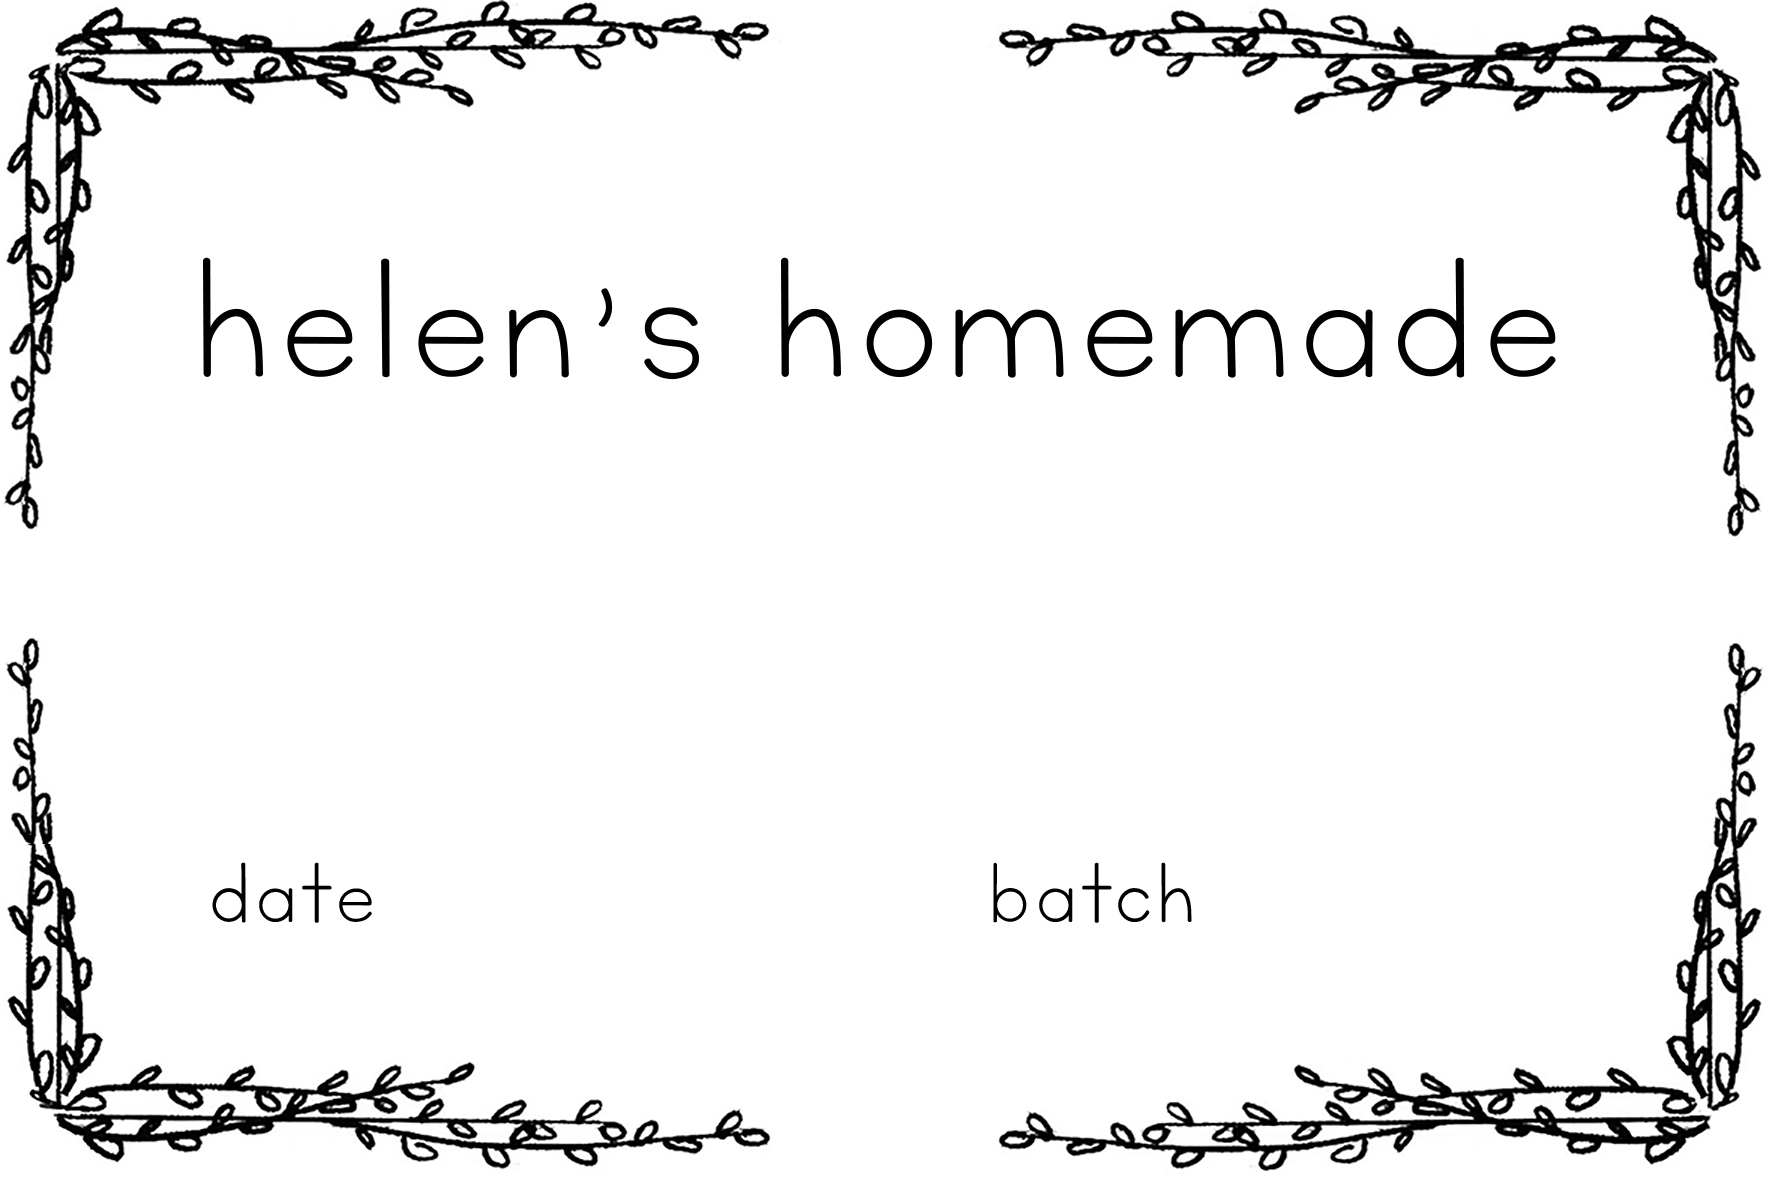 Labels - Helen's homemade